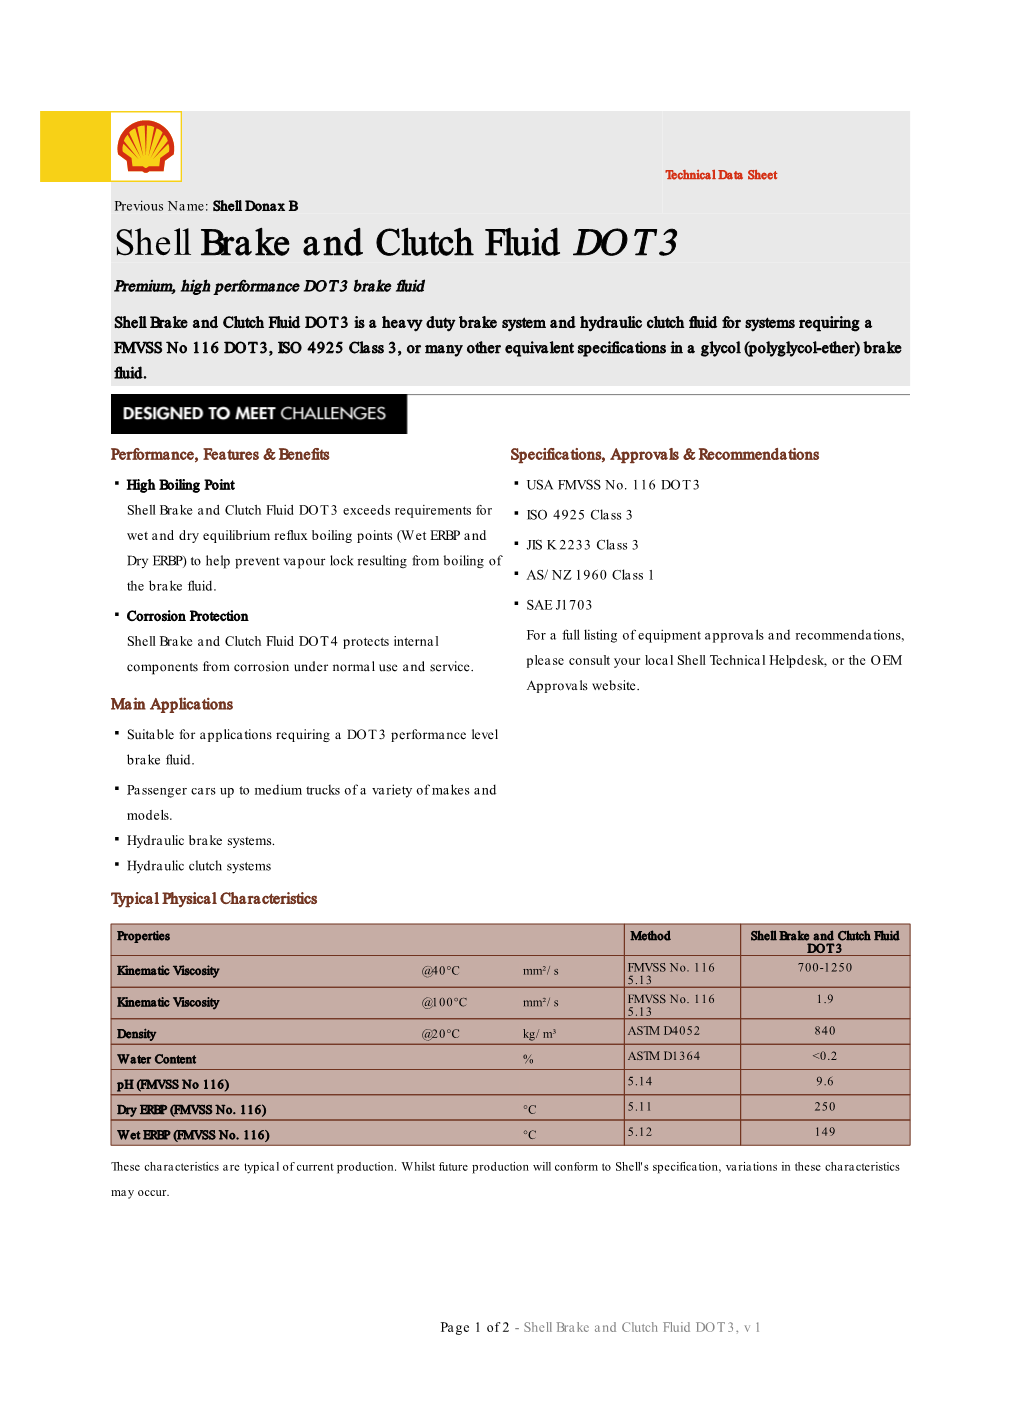 Shell Brake and Clutch Fluid DOT 3